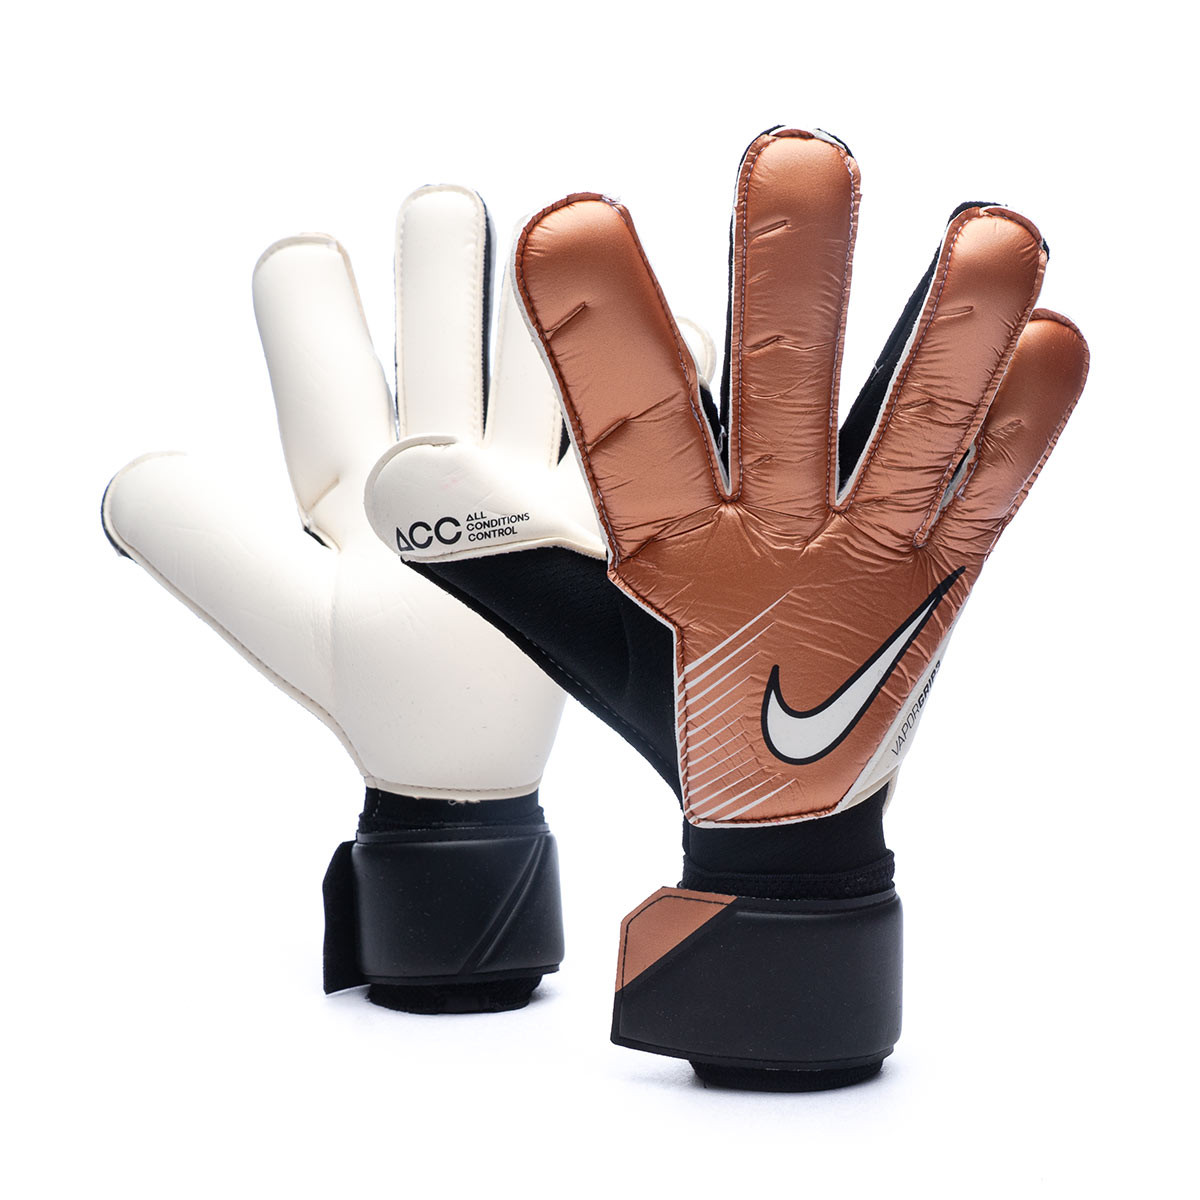 Guante de portero Nike Vapor Grip3 Metallic copper-Black-White Fútbol